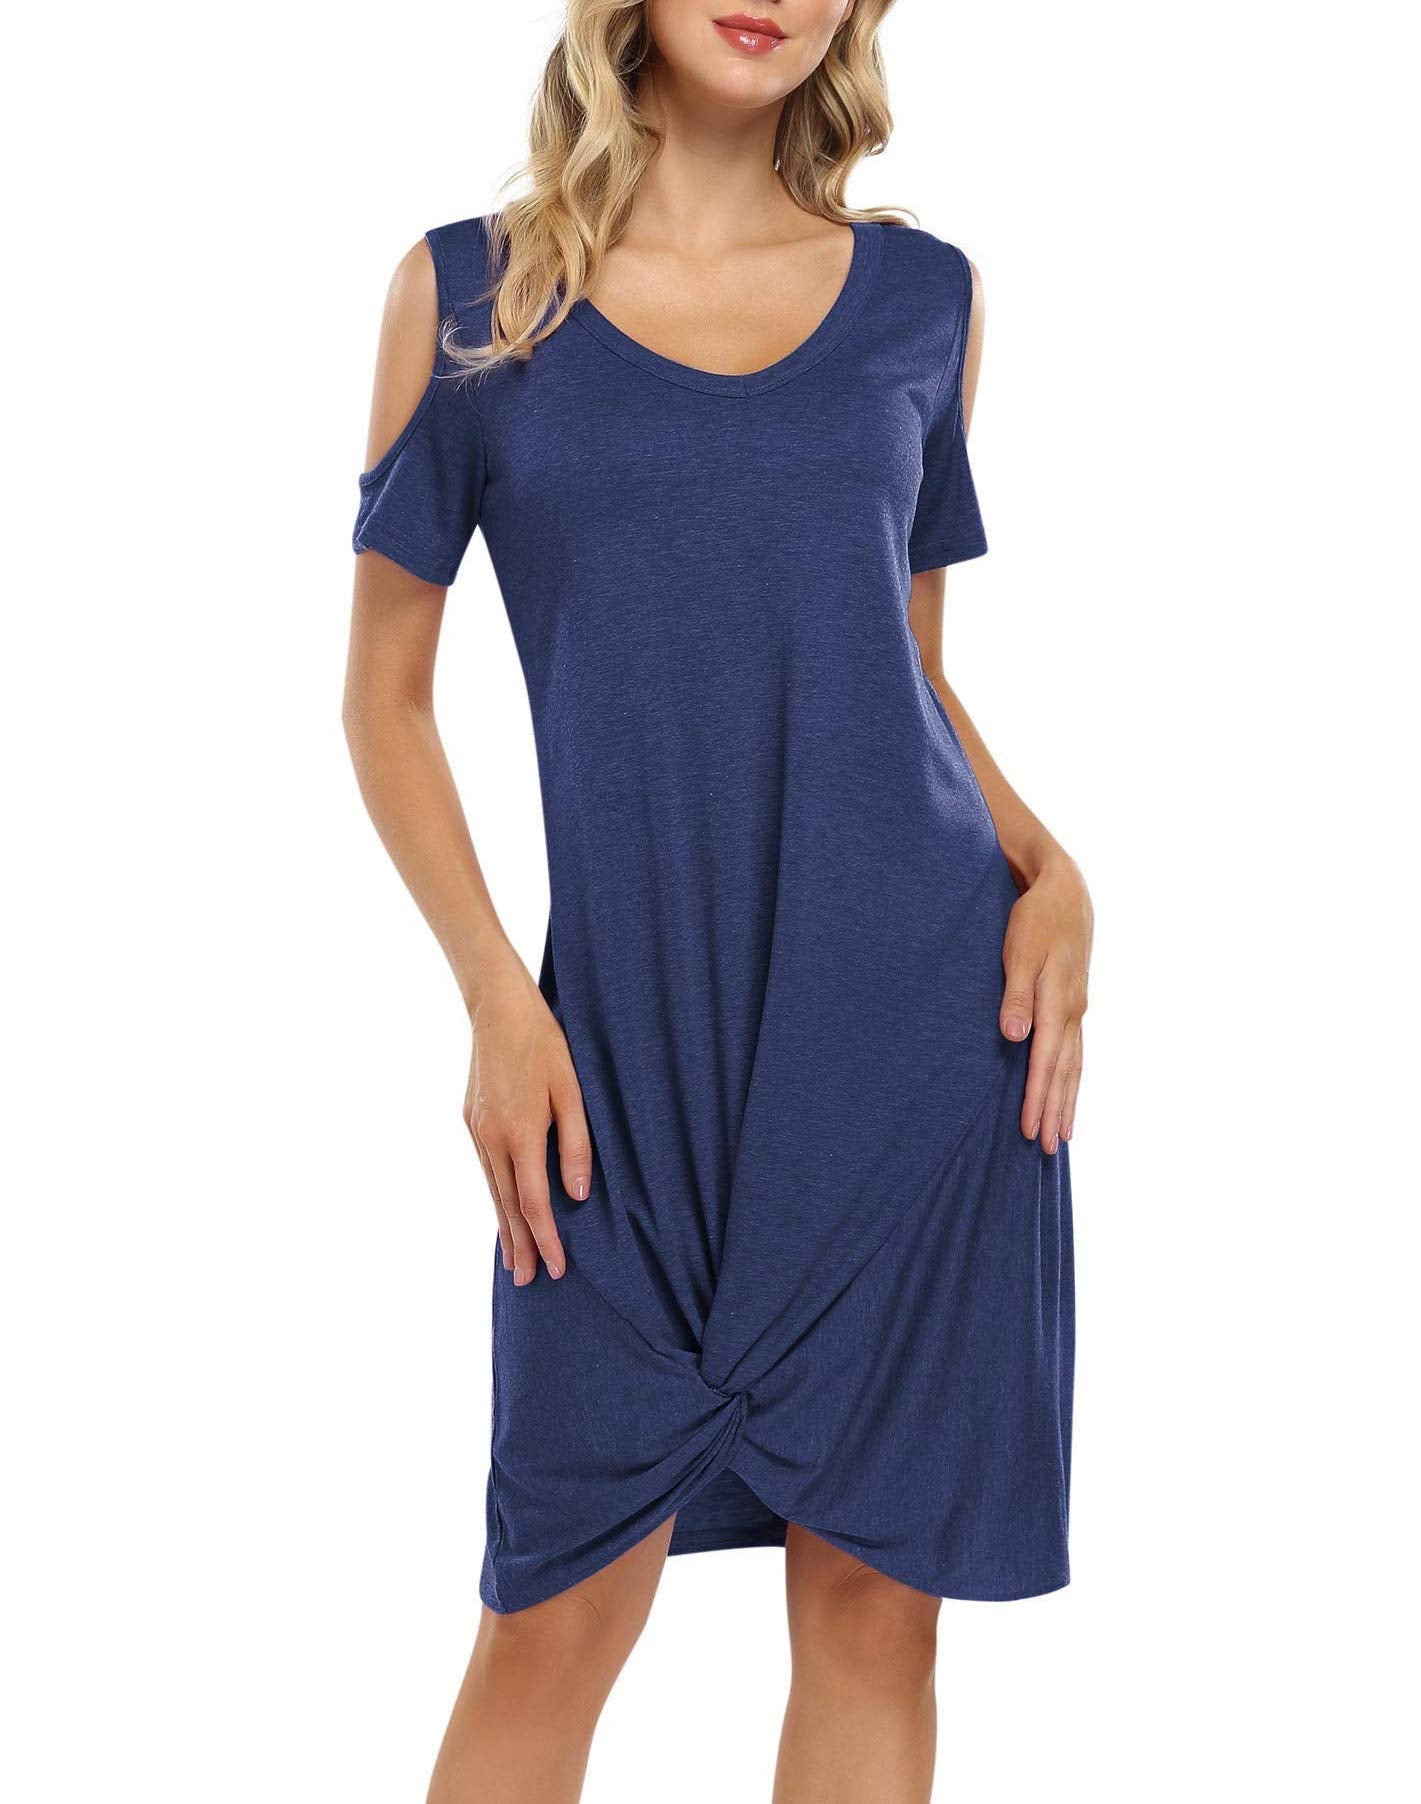 YESFASHION Women's Twist Knot T Shirt Dress Dark Blue